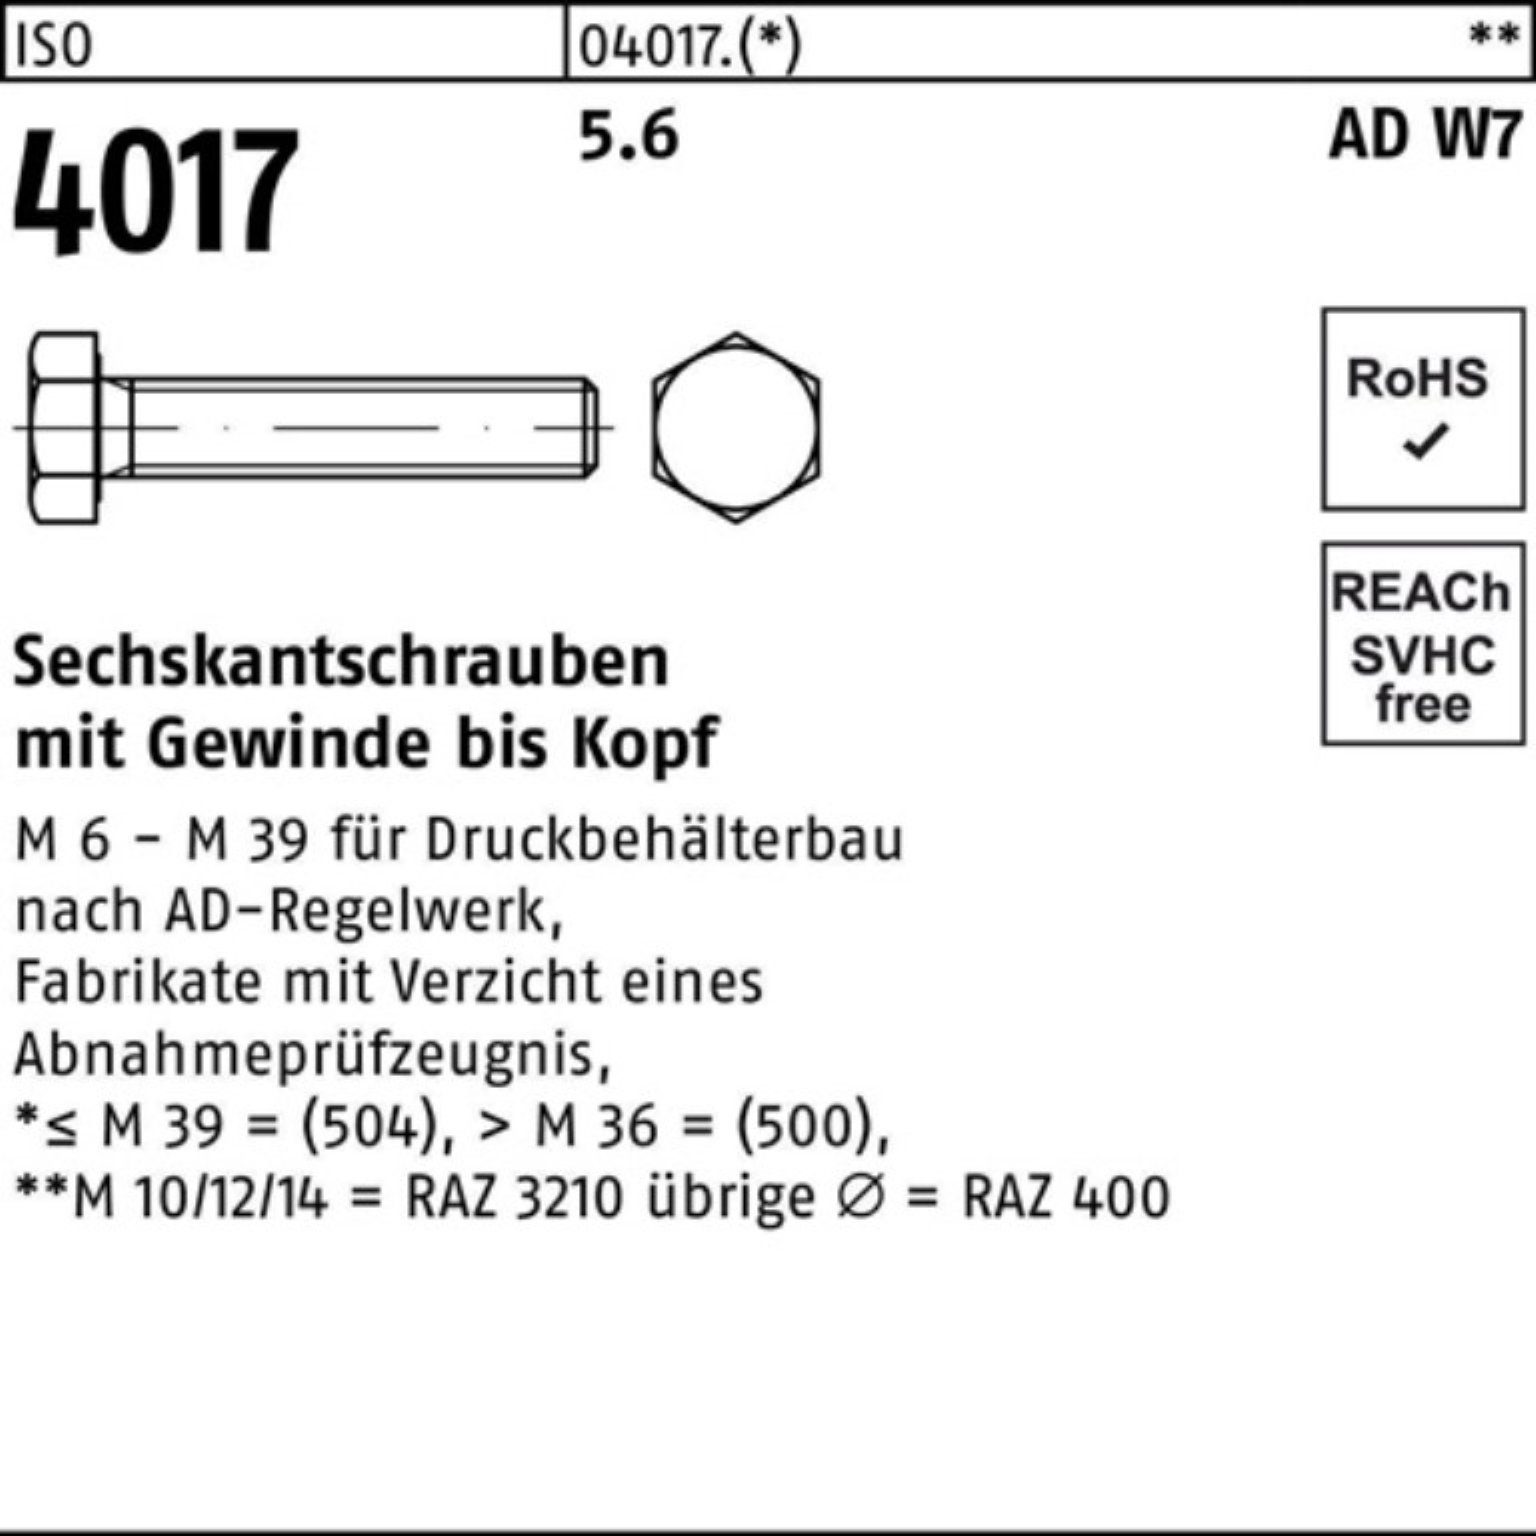 AD Bufab Stück Sechskantschraube 110 Pack 1 W7 100er 4017 VG M27x ISO 5.6 I Sechskantschraube